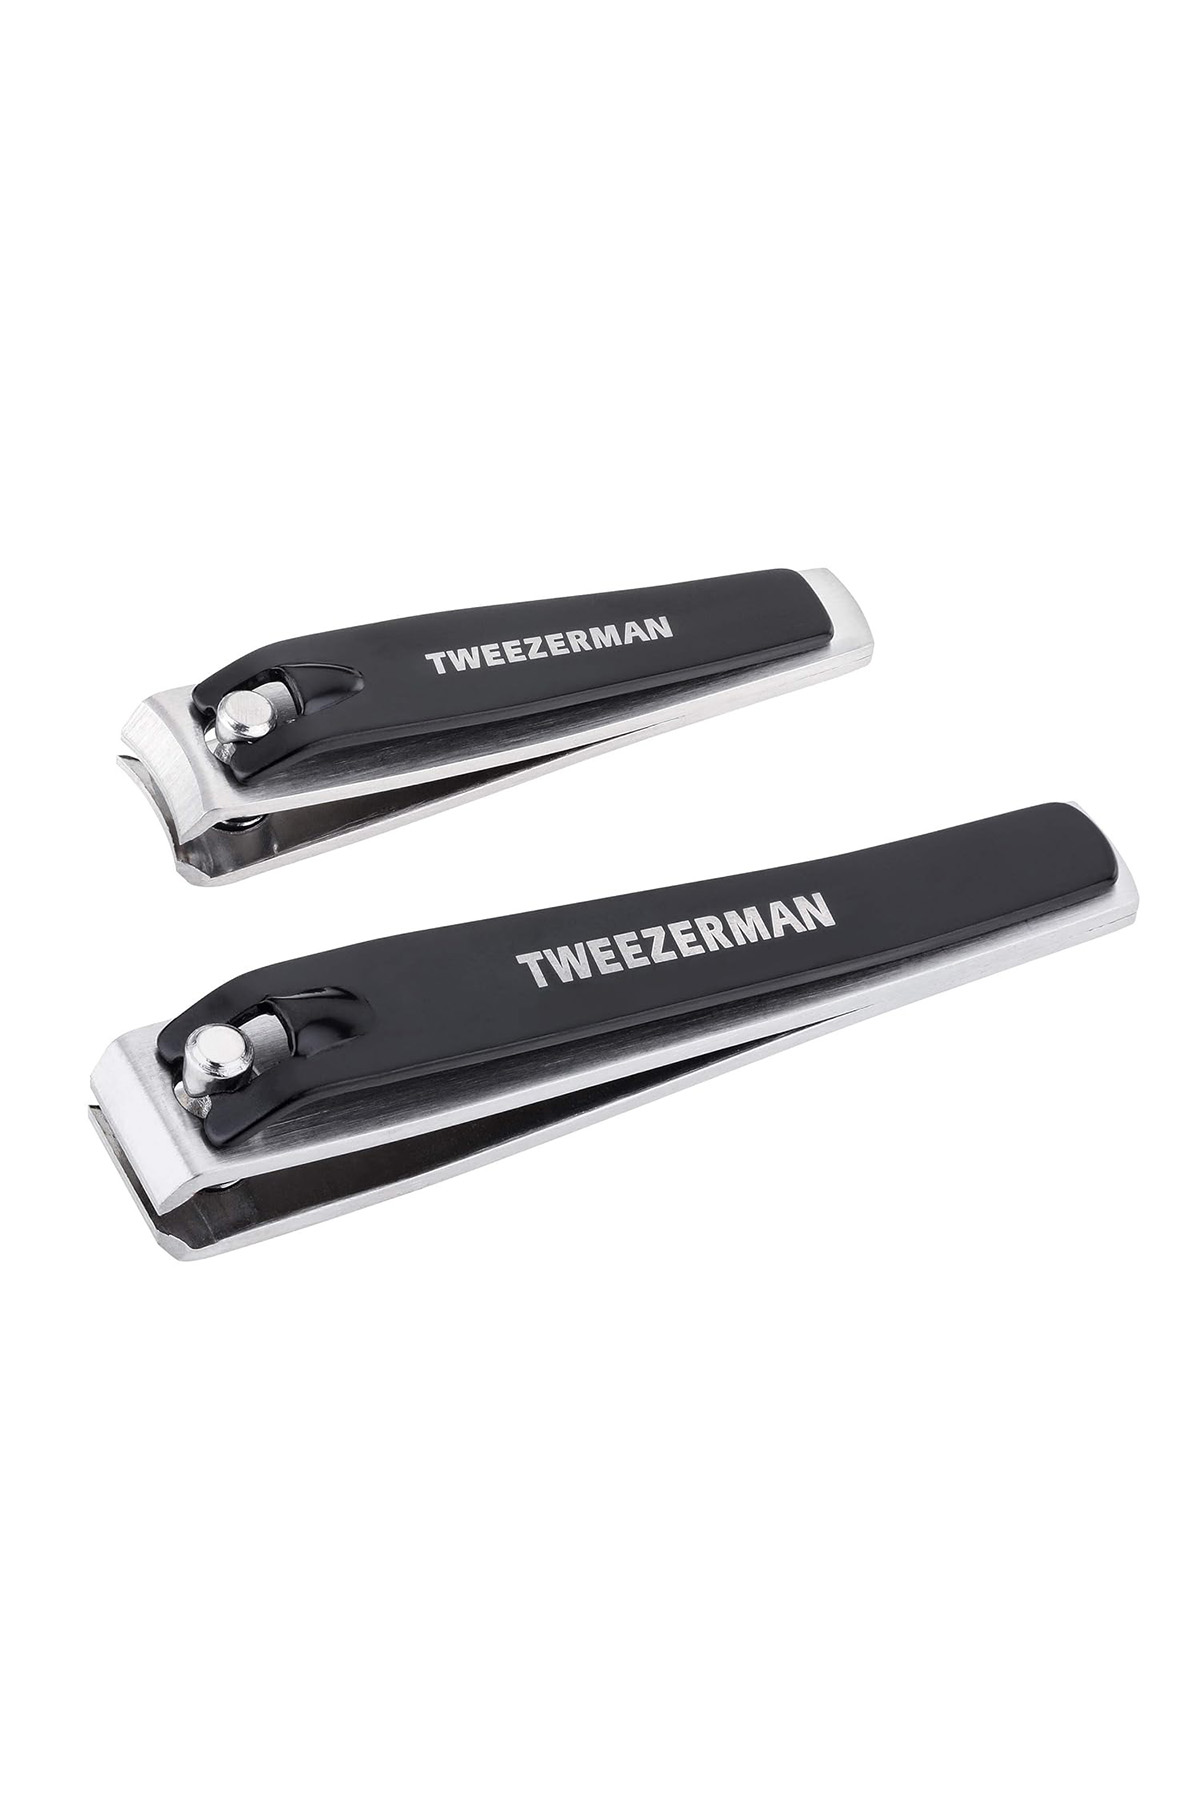 Tweezerman Stainless Steel Nail Combo Set